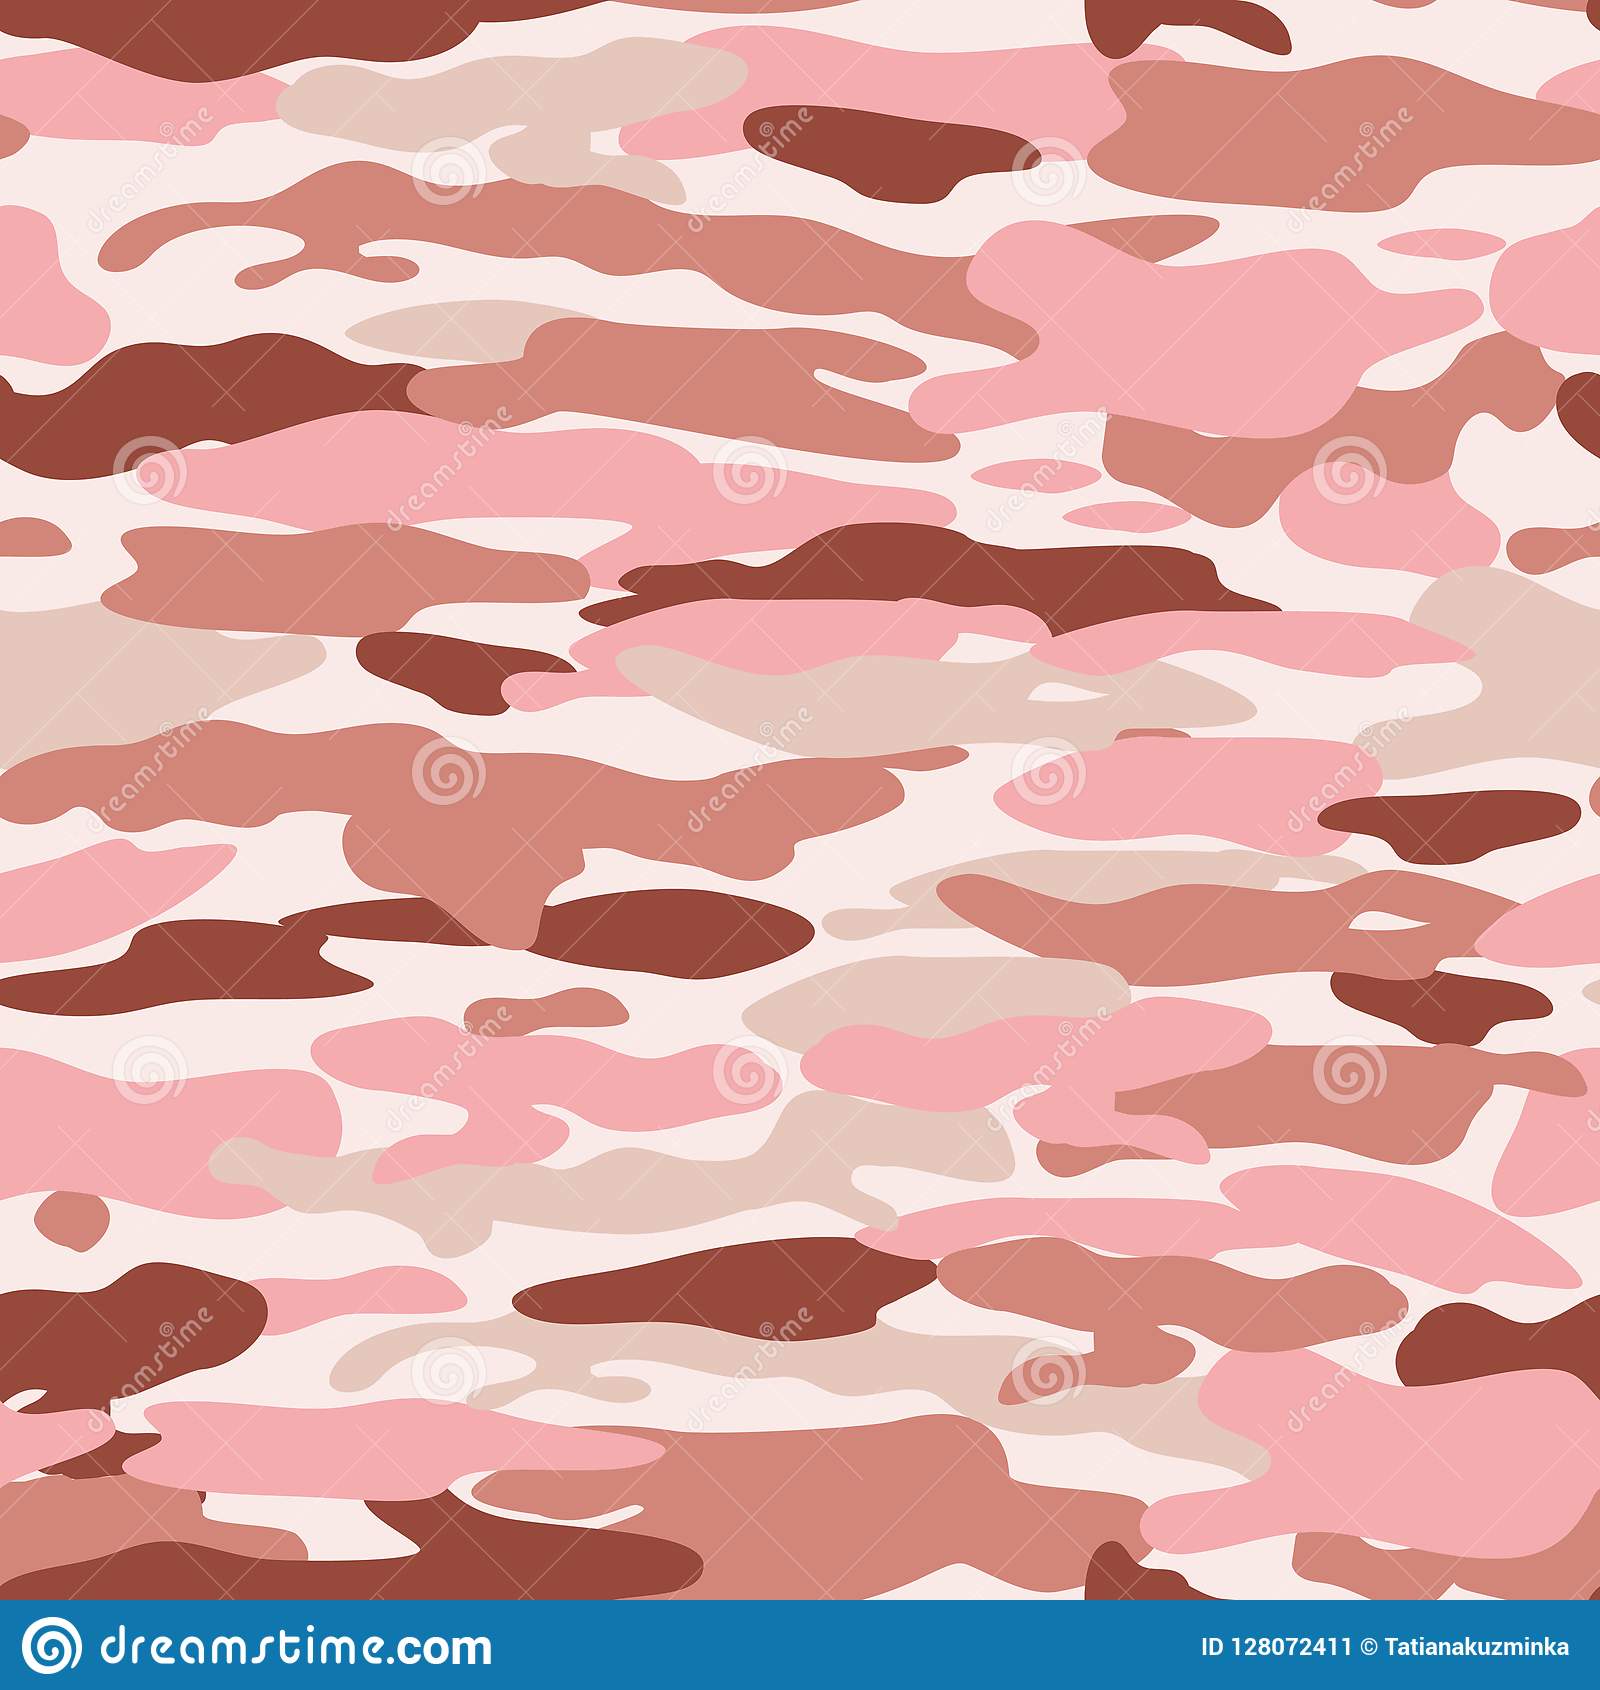 wallpaper loreng tentara,pink,pattern,peach,design,sky